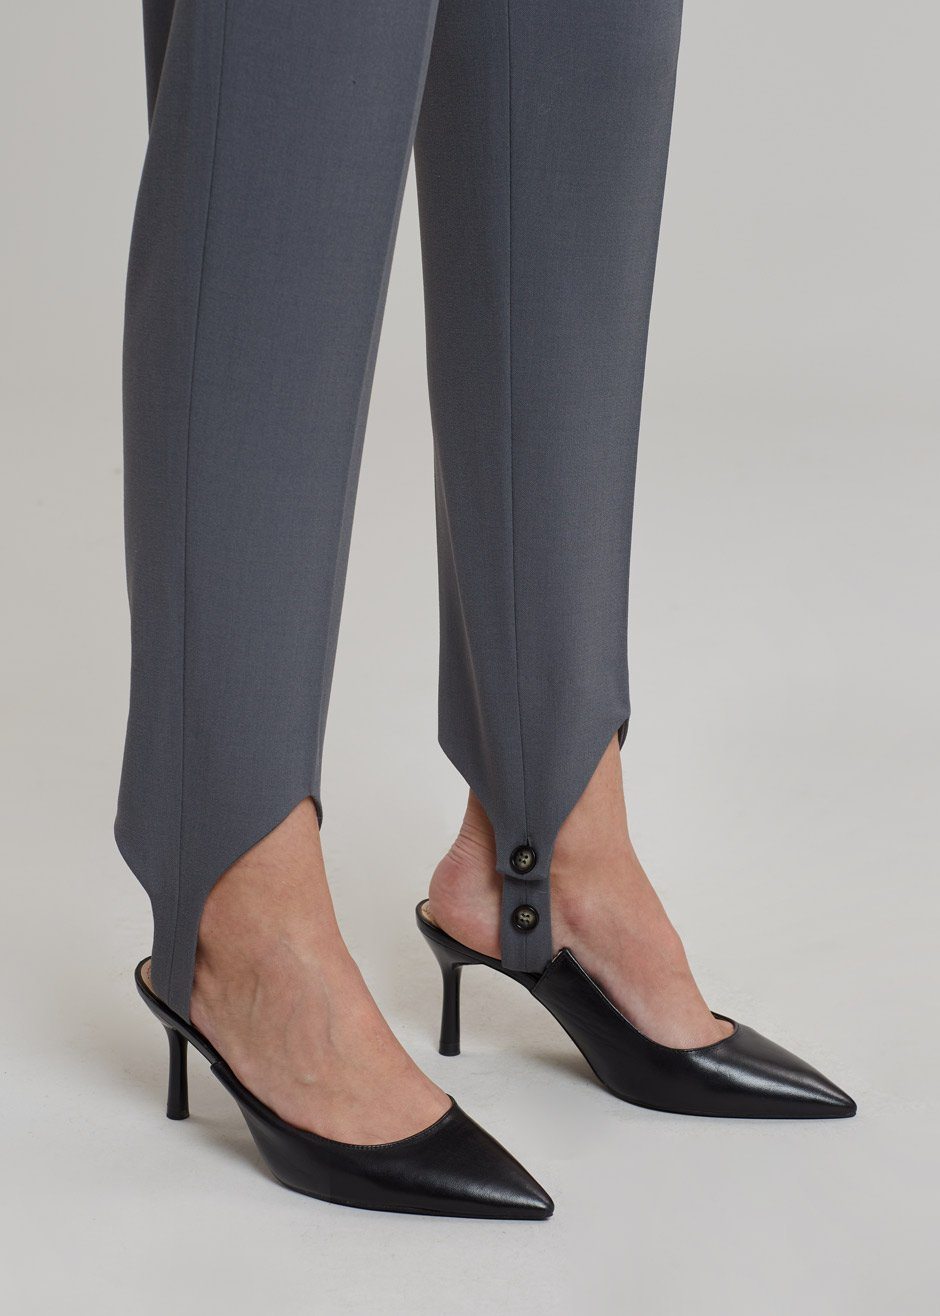 Nanushka Darby Stirrup Suit Pants - Grey - 4